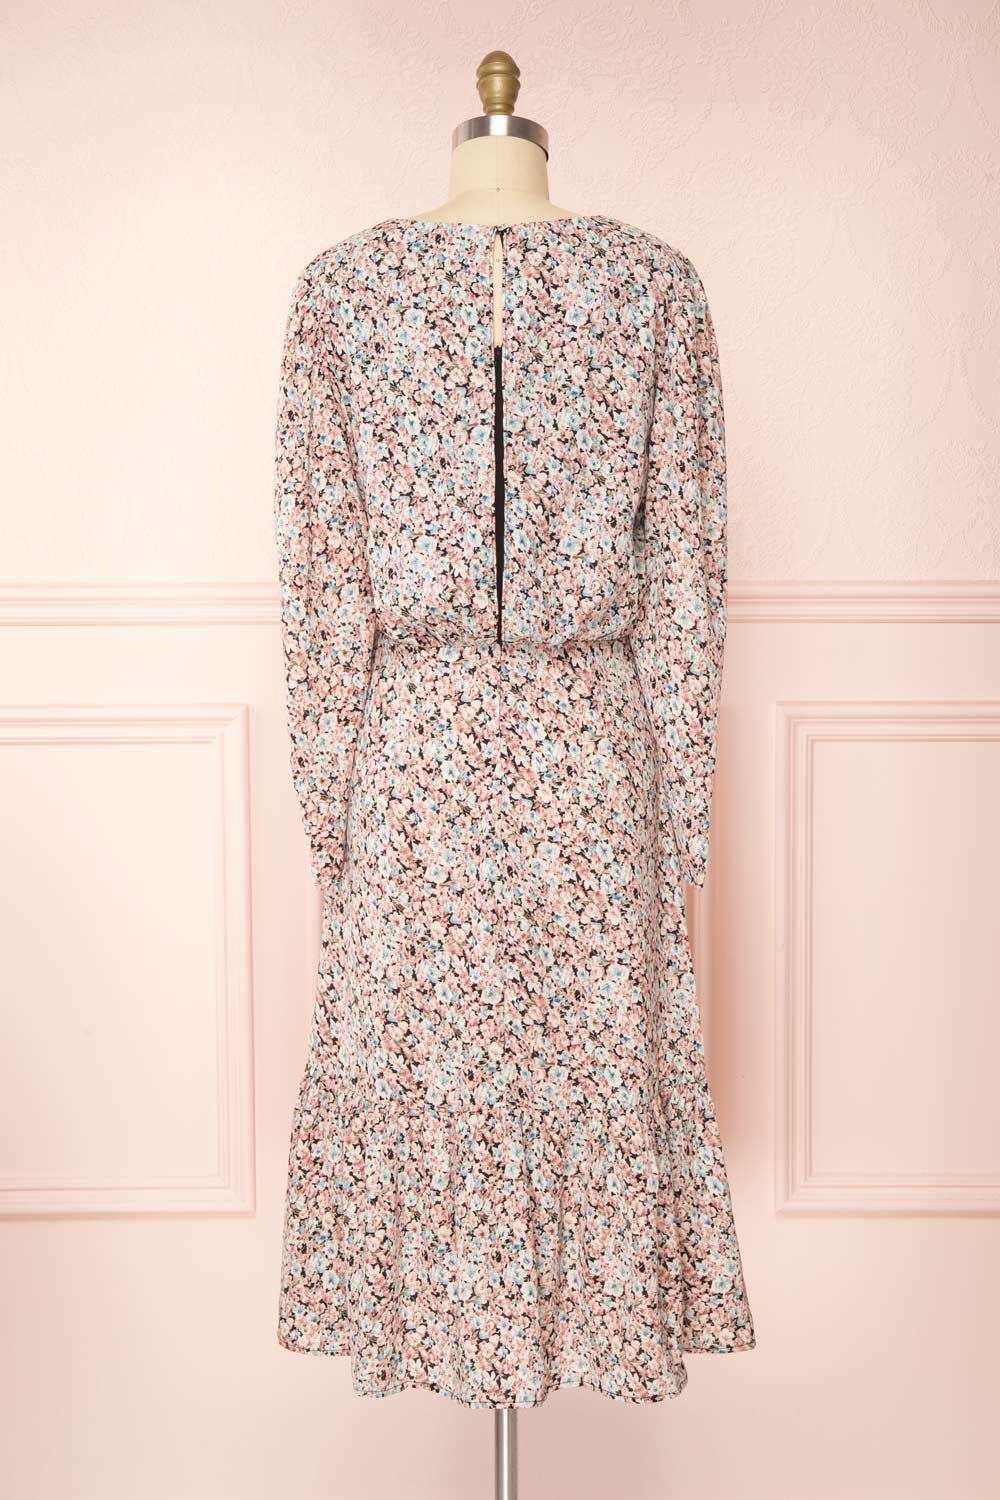 Rosalind Floral Long Sleeve Midi Dress | Boutique 1861 back view